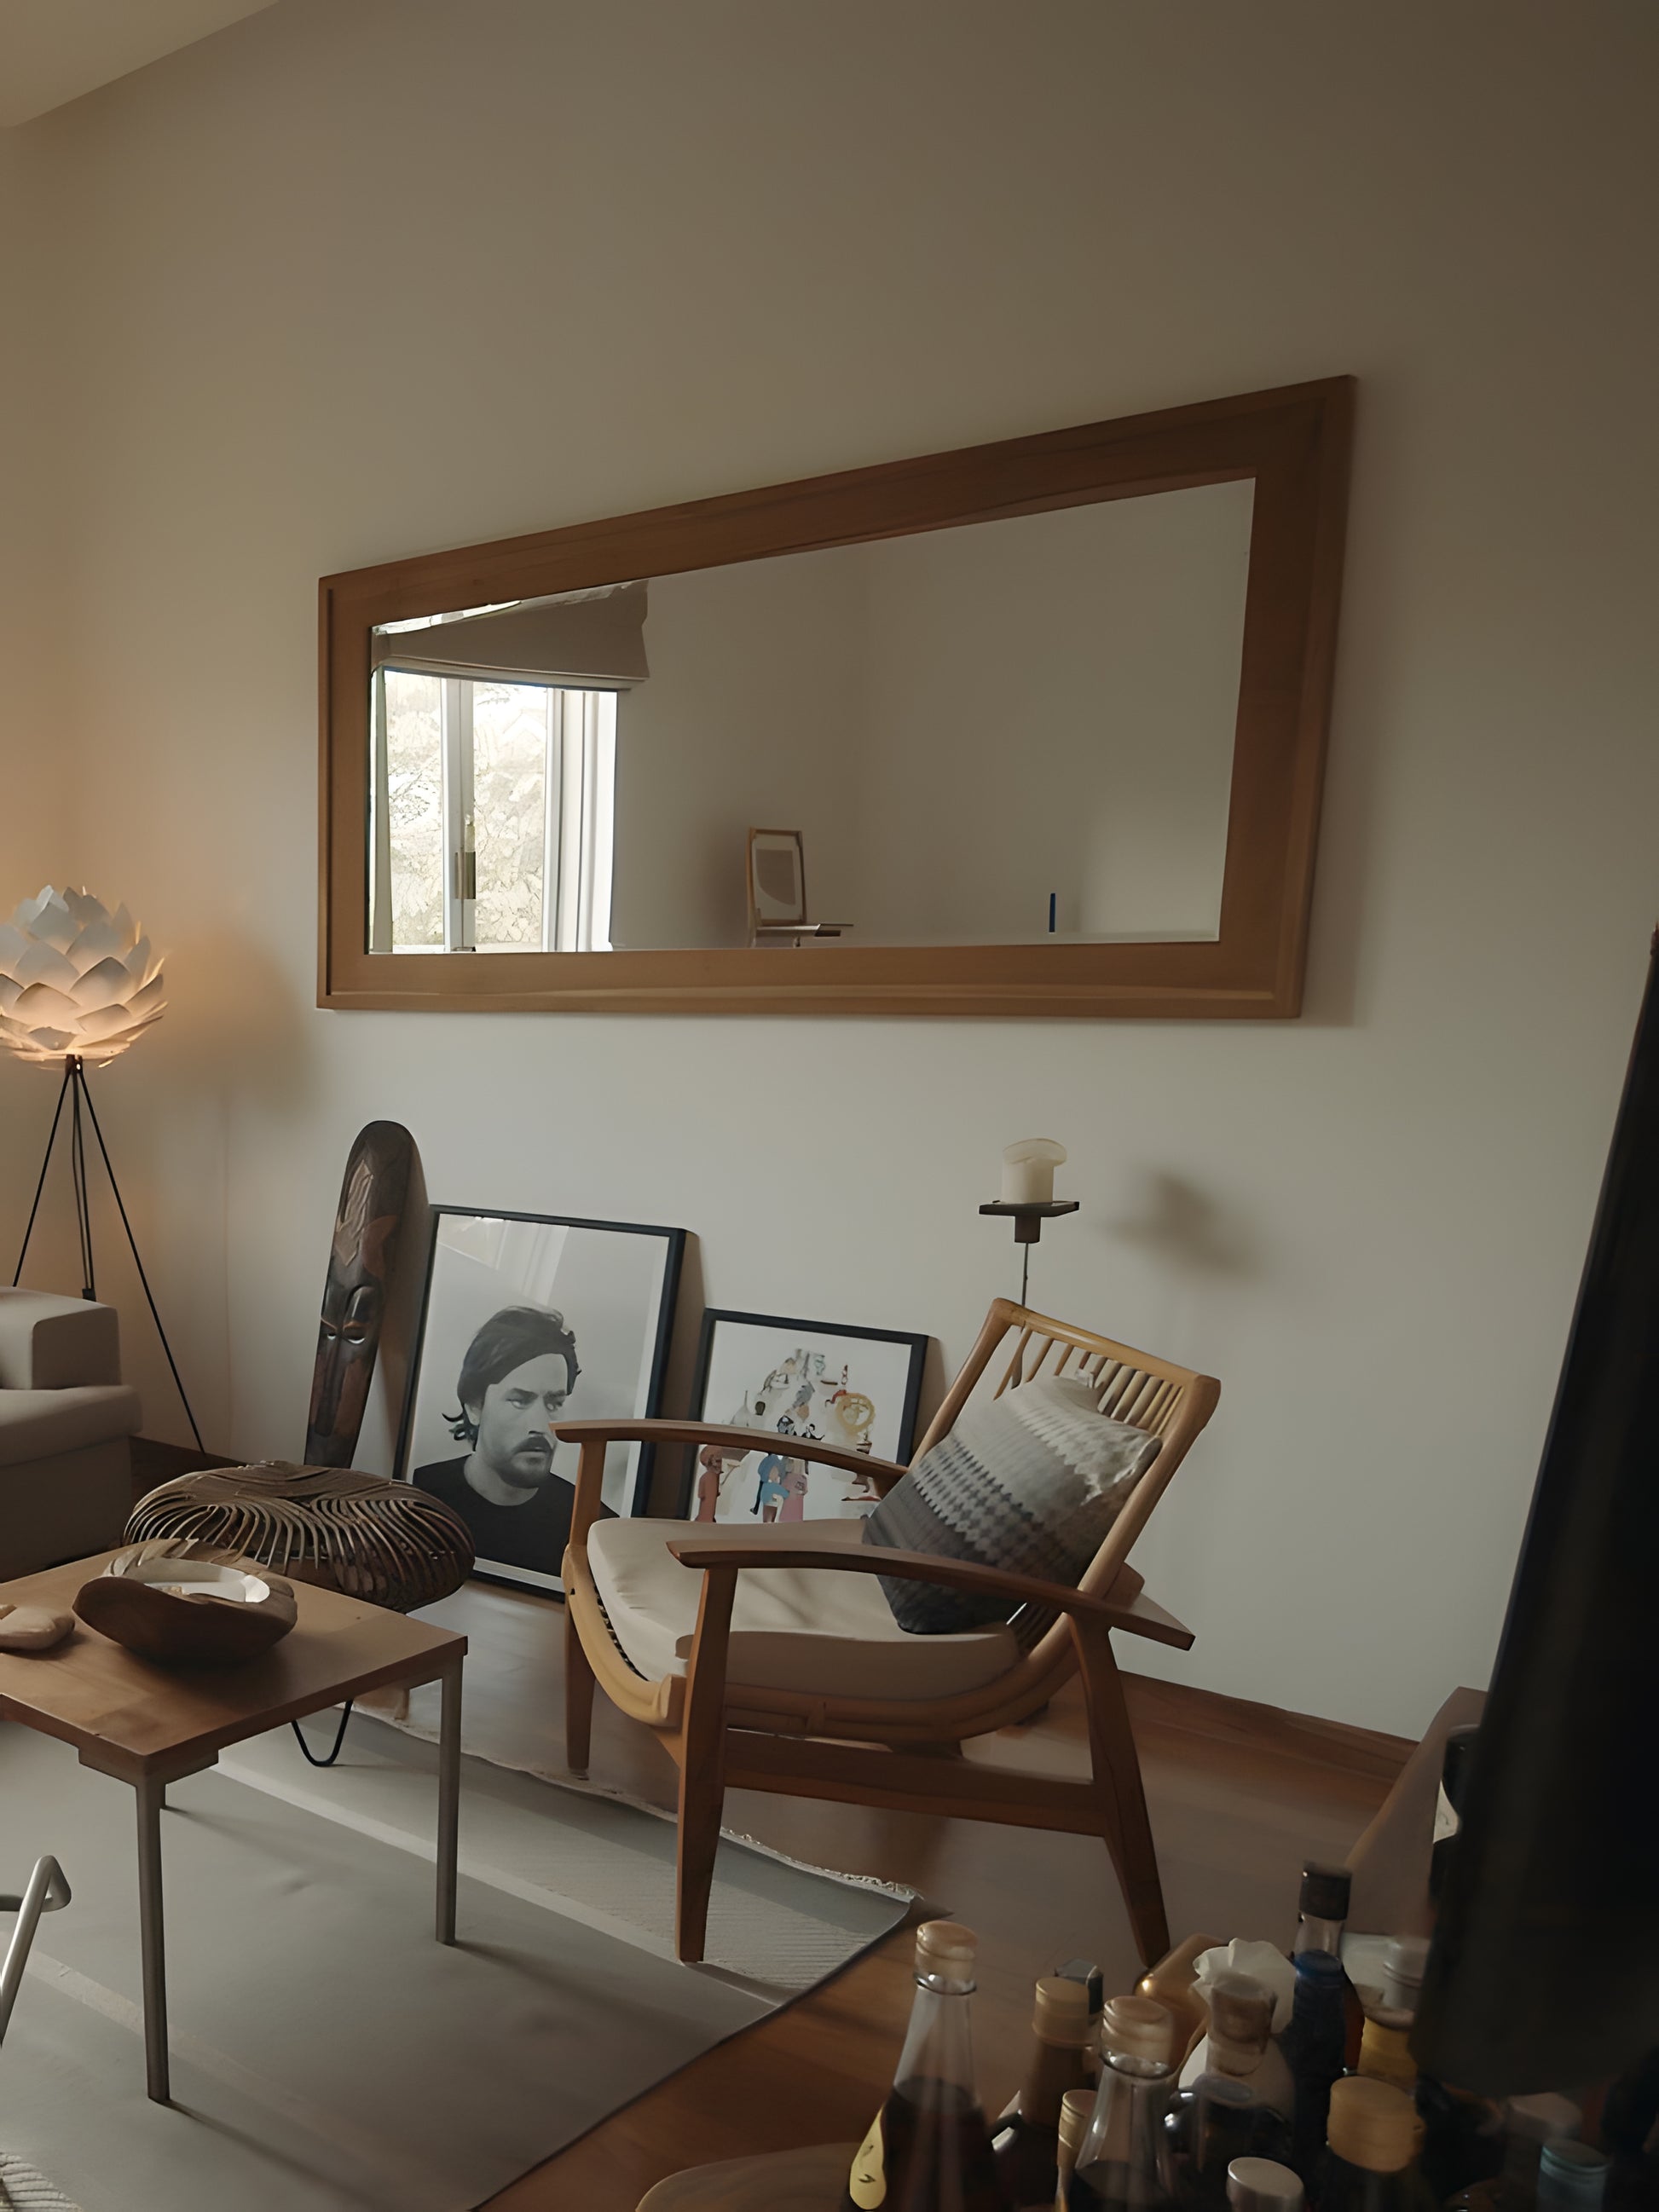 Rinjani Teak & Rattan Armchair in living room setting by Mellowdays Furniture